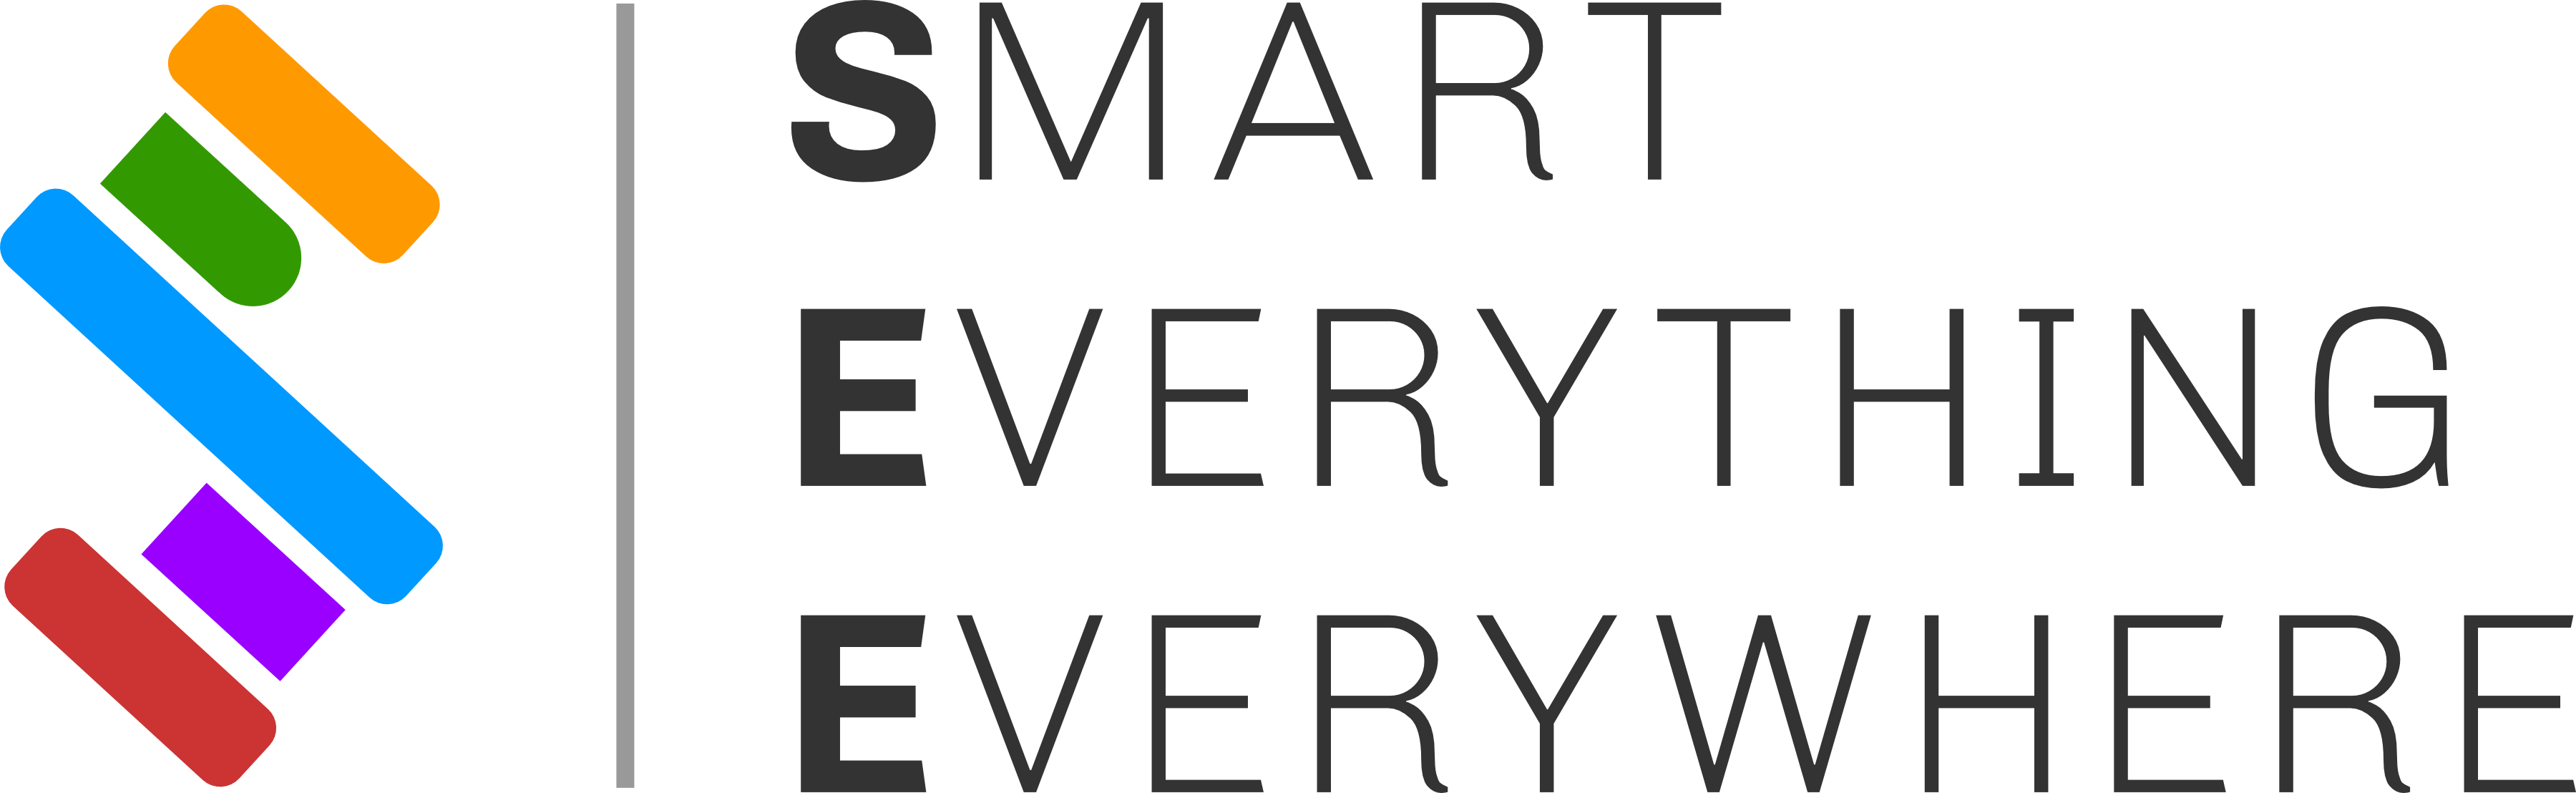 Smart Everything Everywhere logo